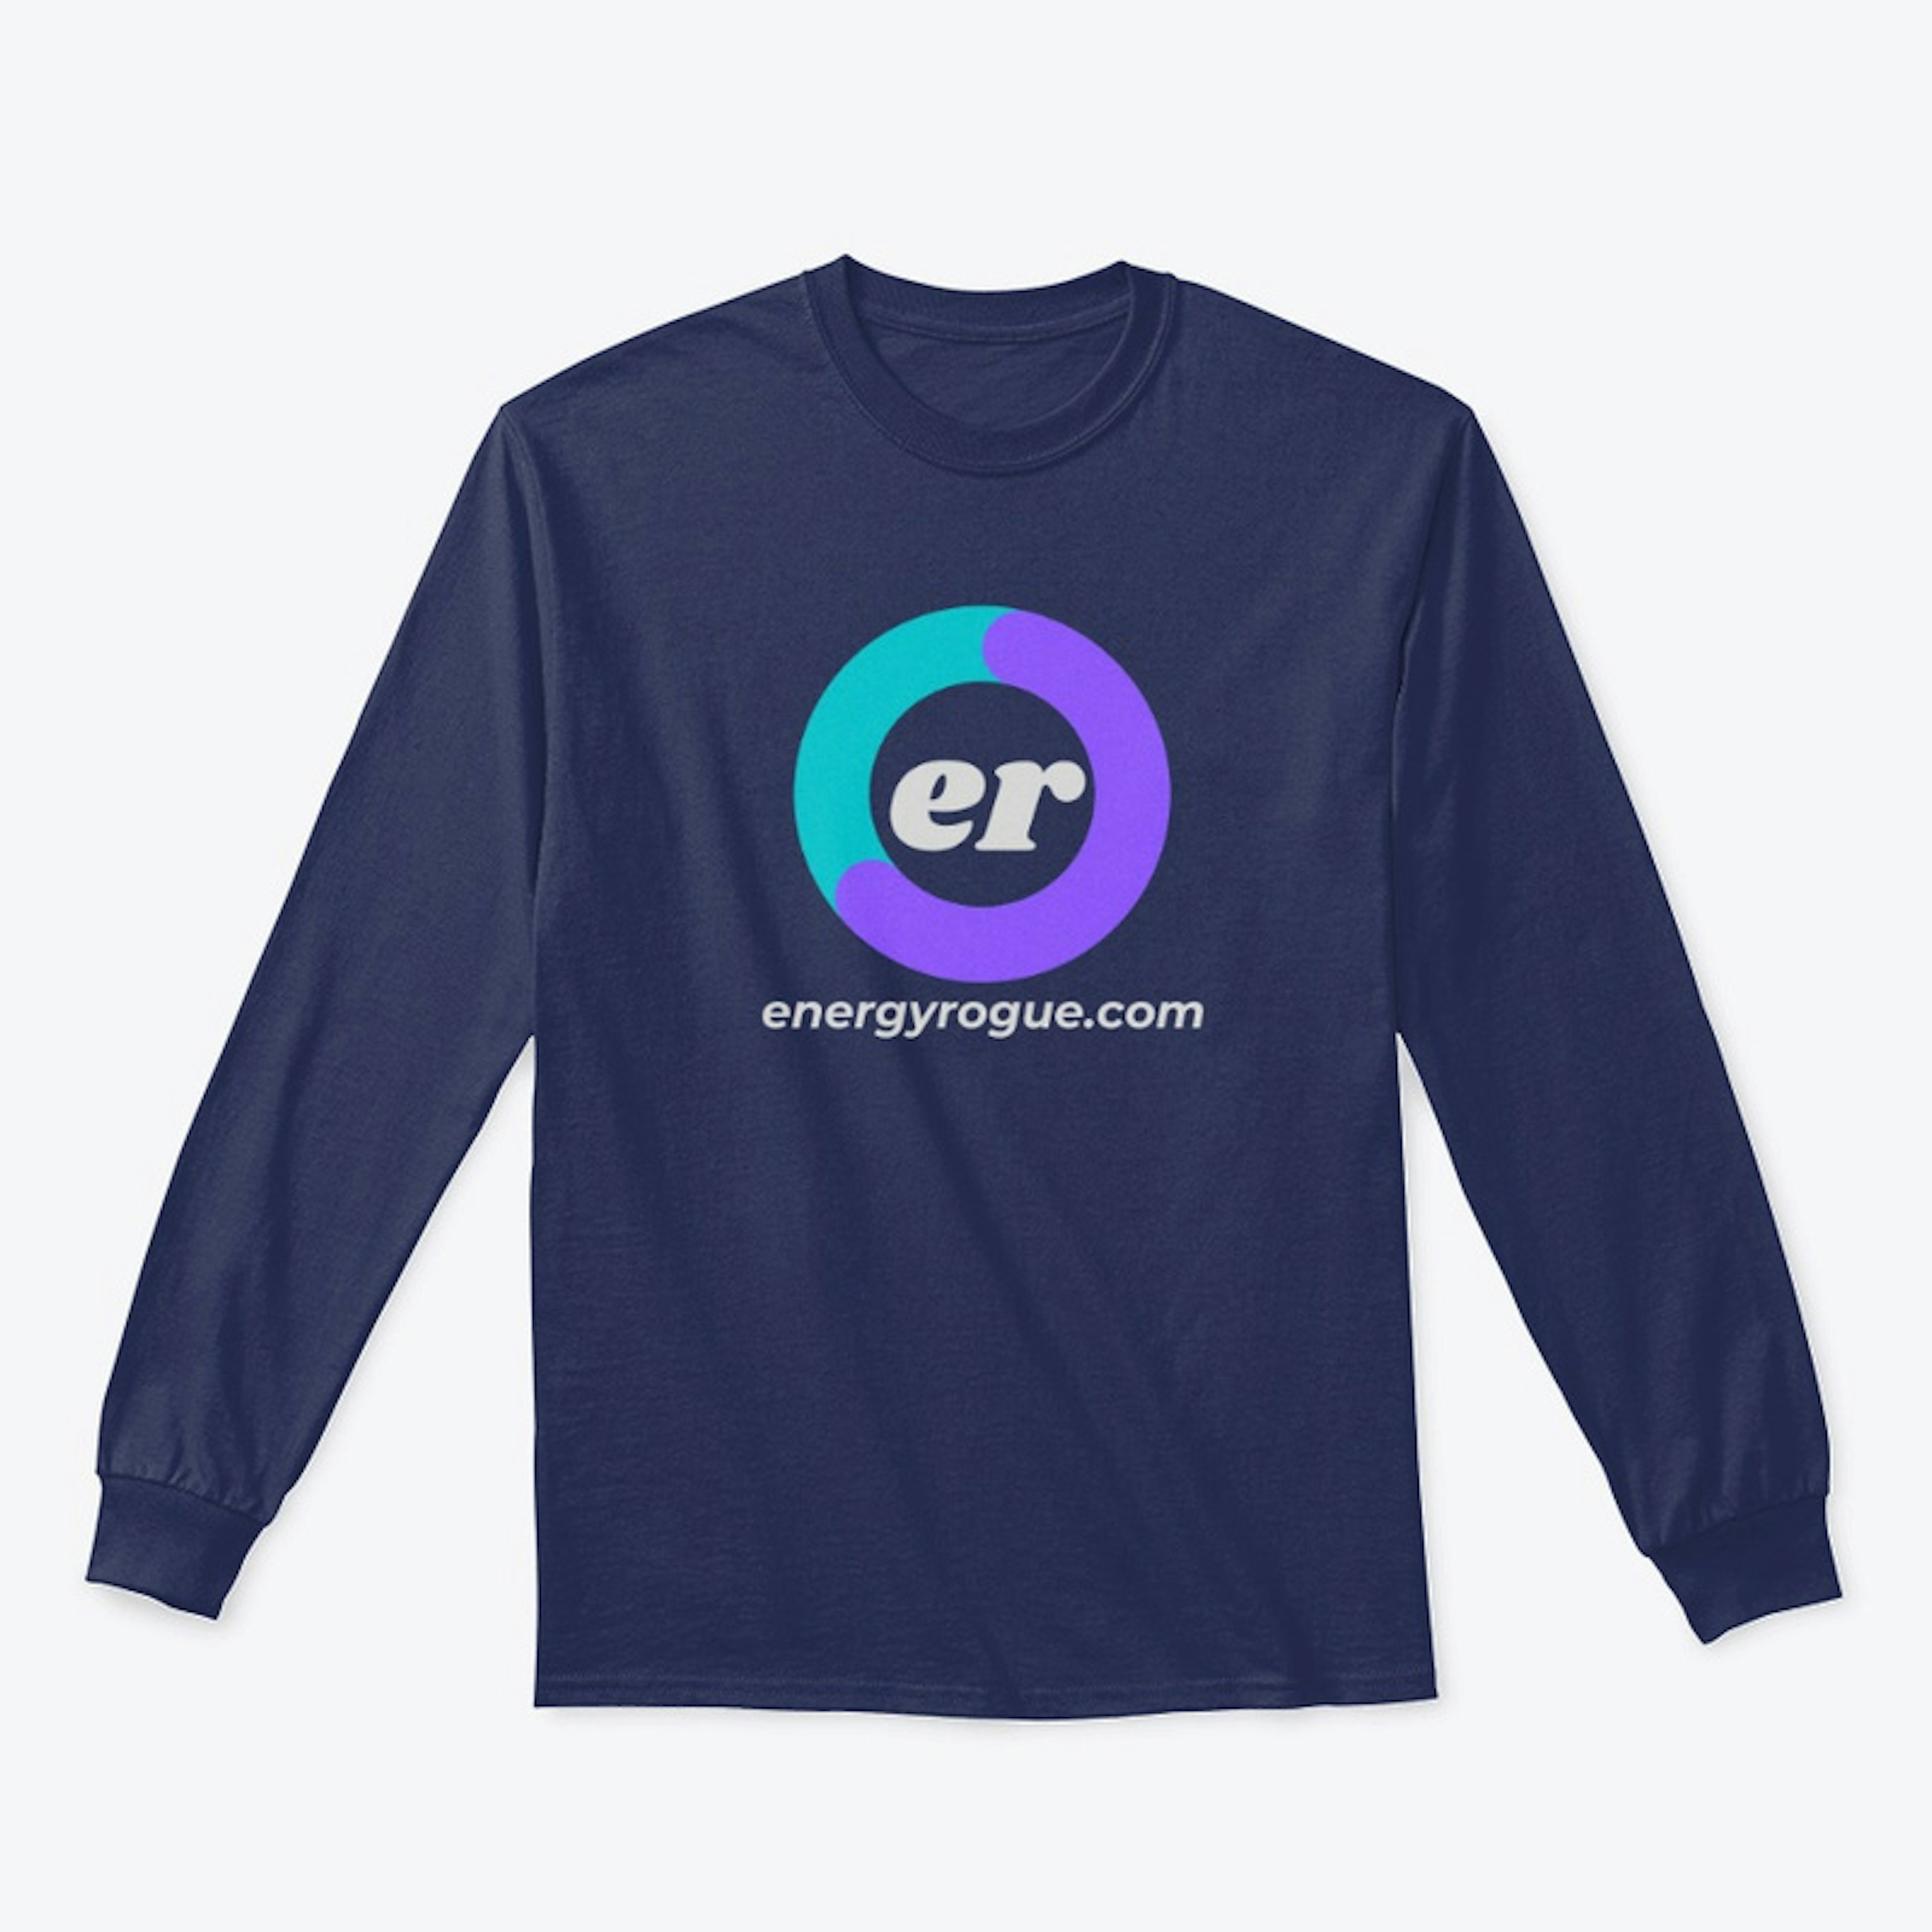 energyrogue.com long sleeve t-shirt